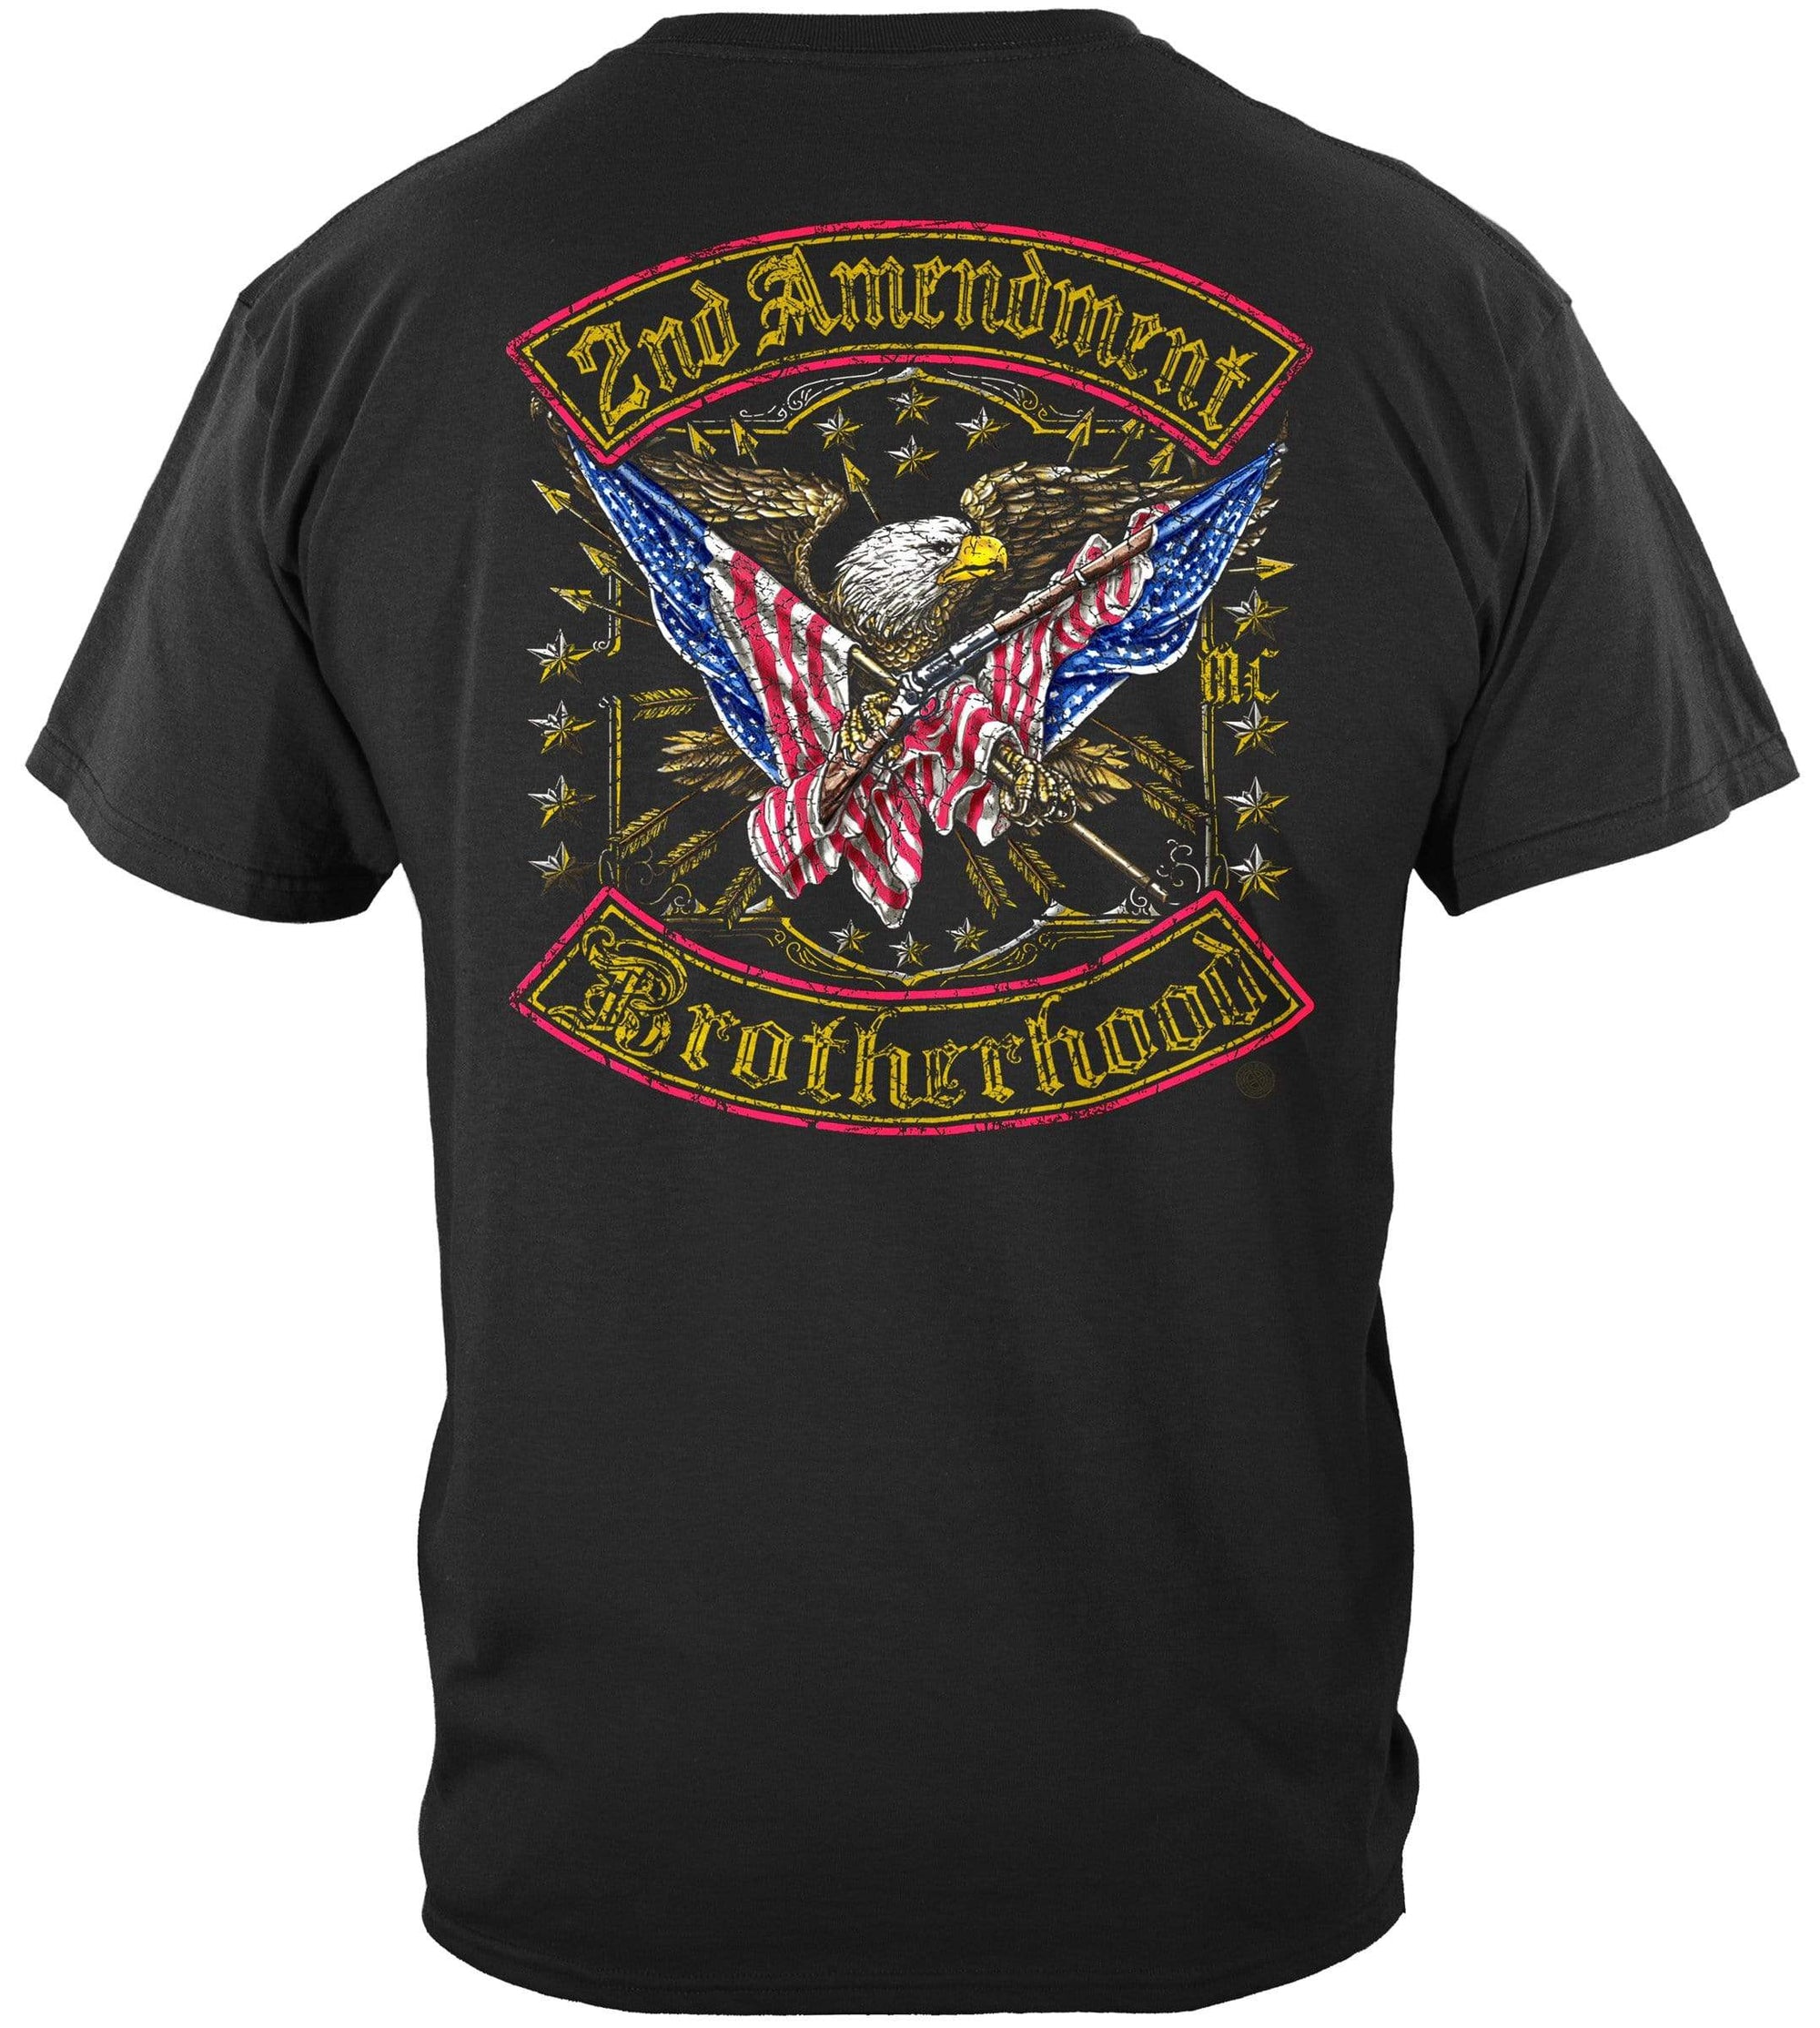 2nd Amendment Brotherhood T-Shirt